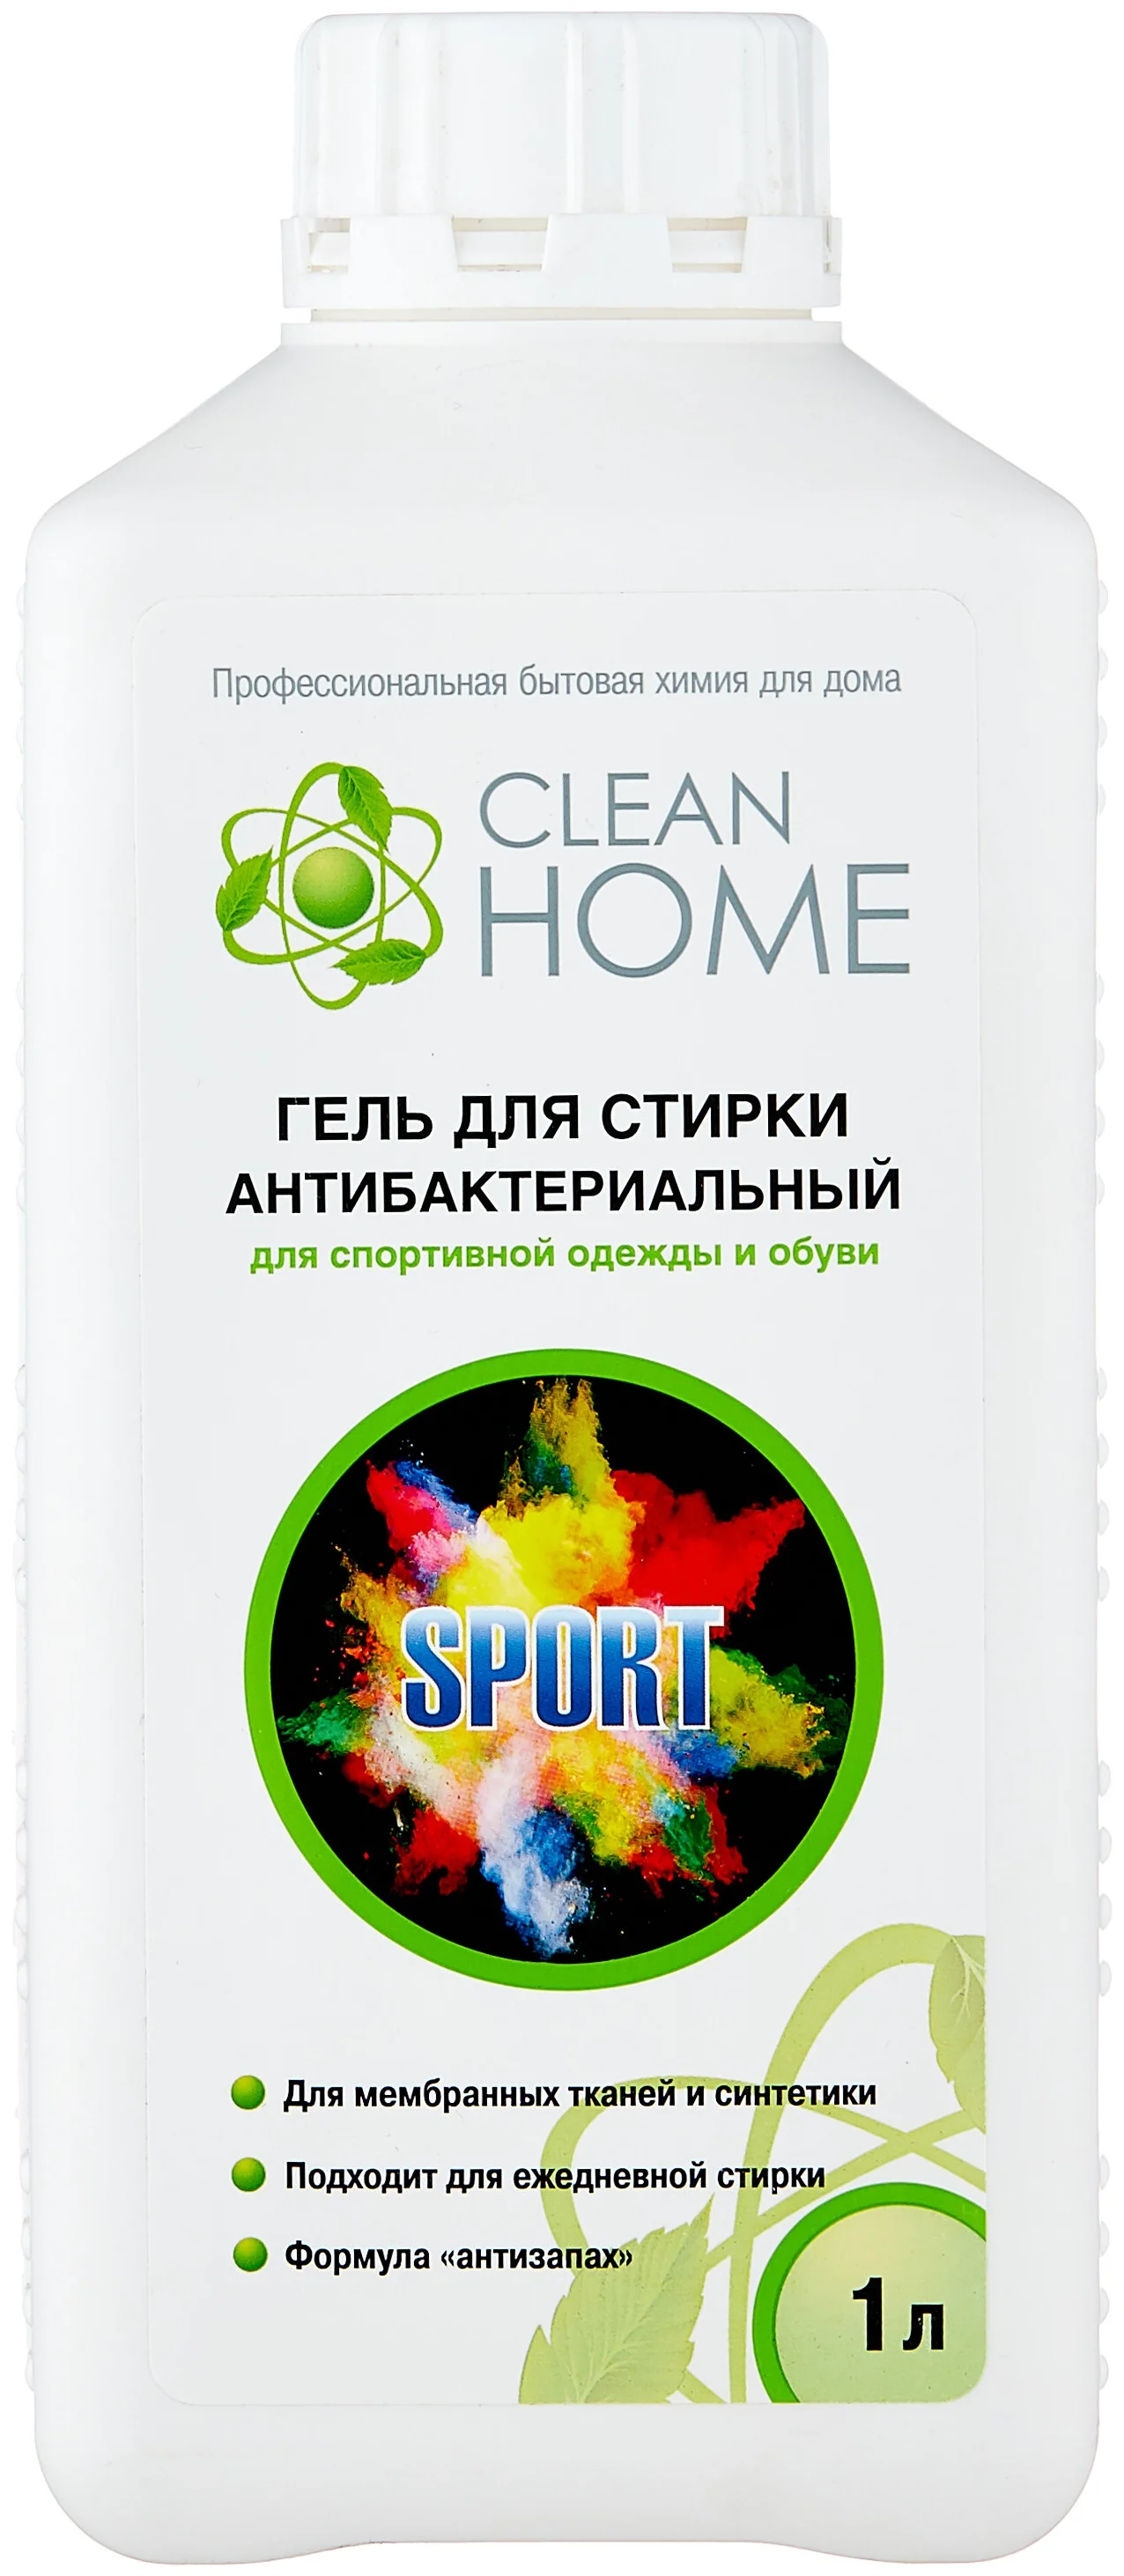 Clean Home - назначение: для мембранных тканей, для хлопковых тканей, для цветных тканей, для синтетических тканей, для белых и светлых тканей